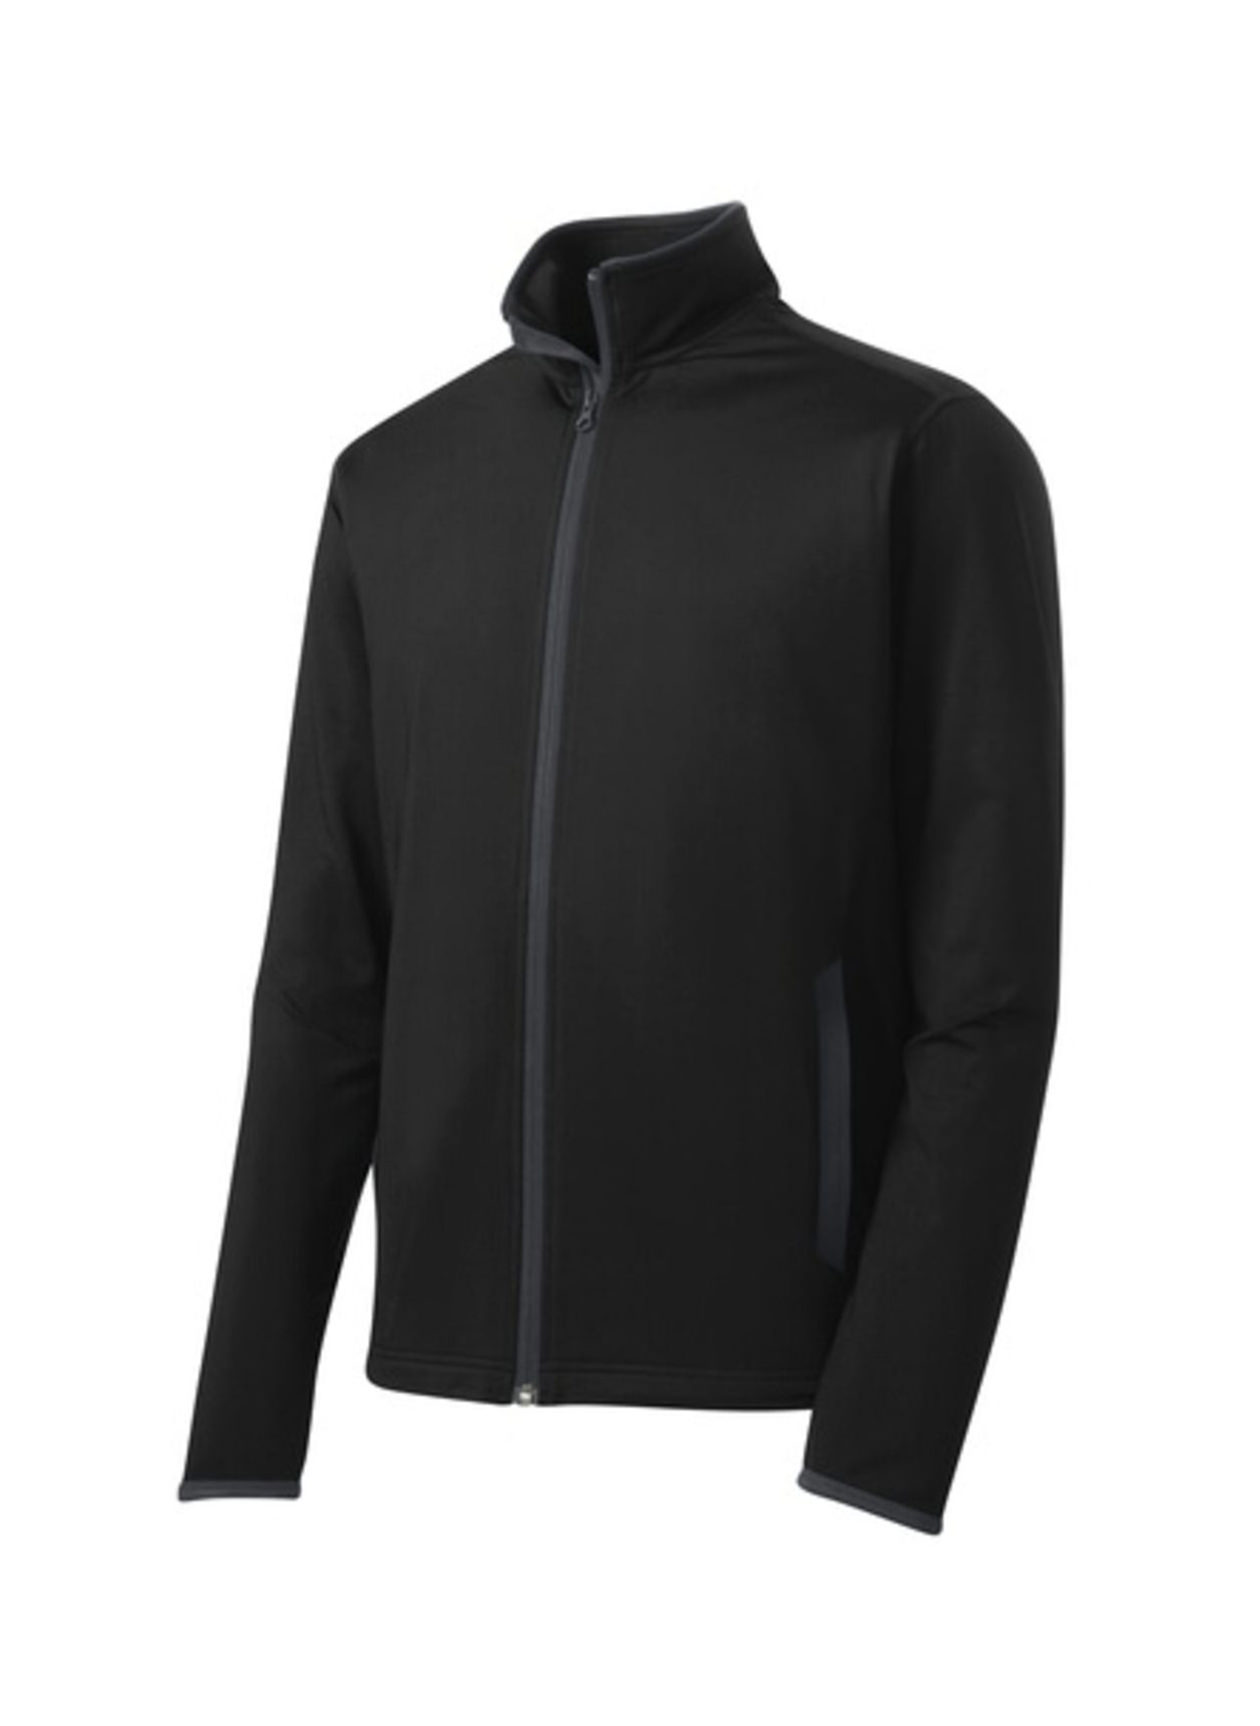 SPORT-TEK Men's Black/Charcoal Grey Sport-Wick Stretch Contrast Jacket